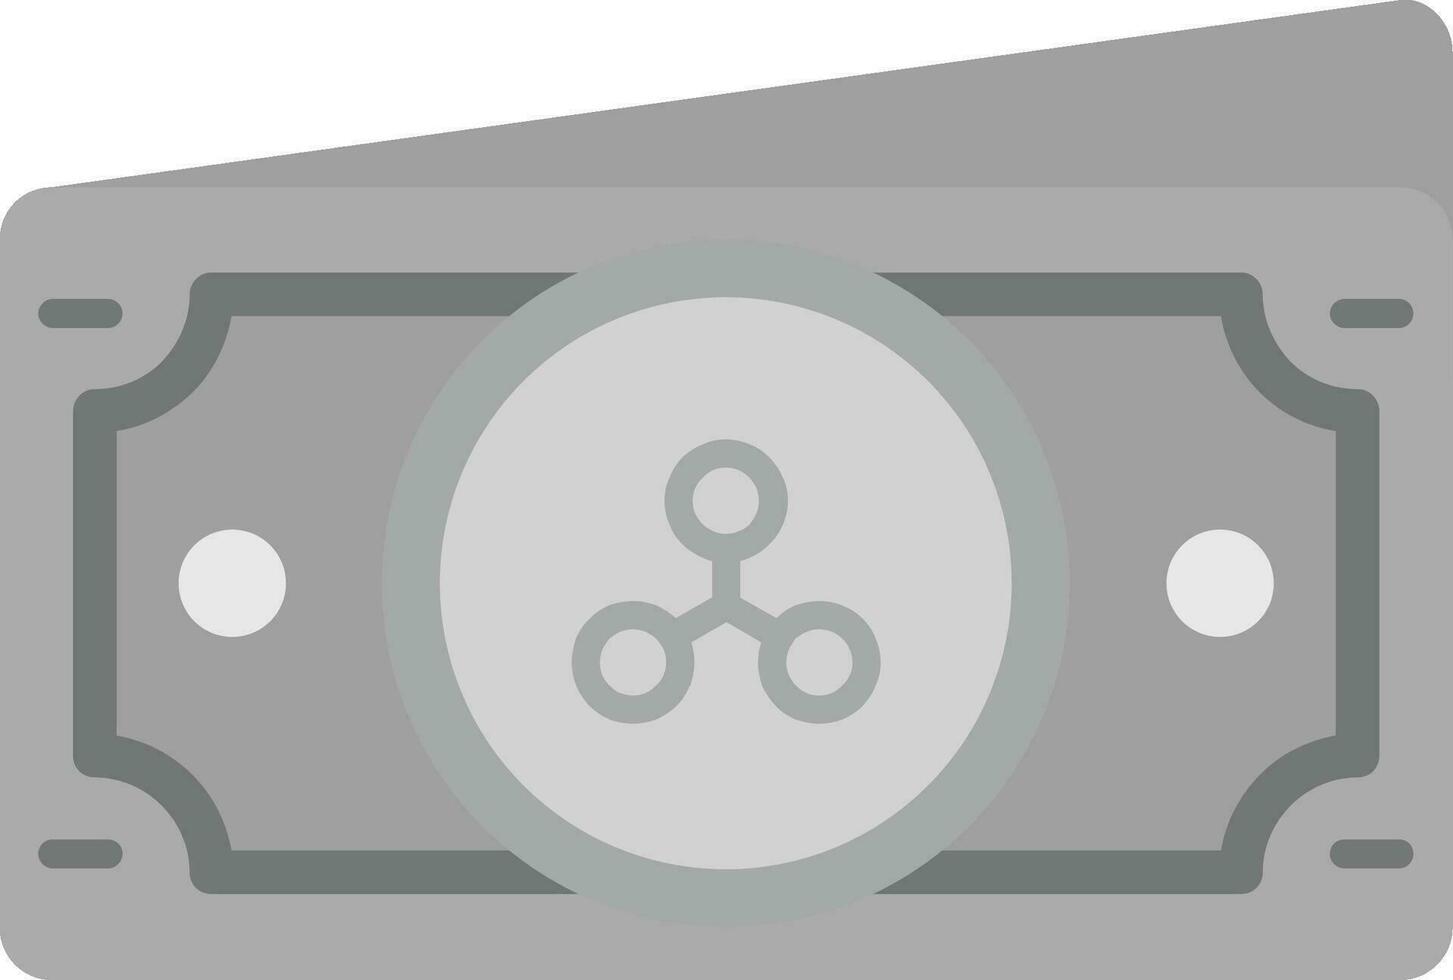 Rippie Grey scale Icon vector